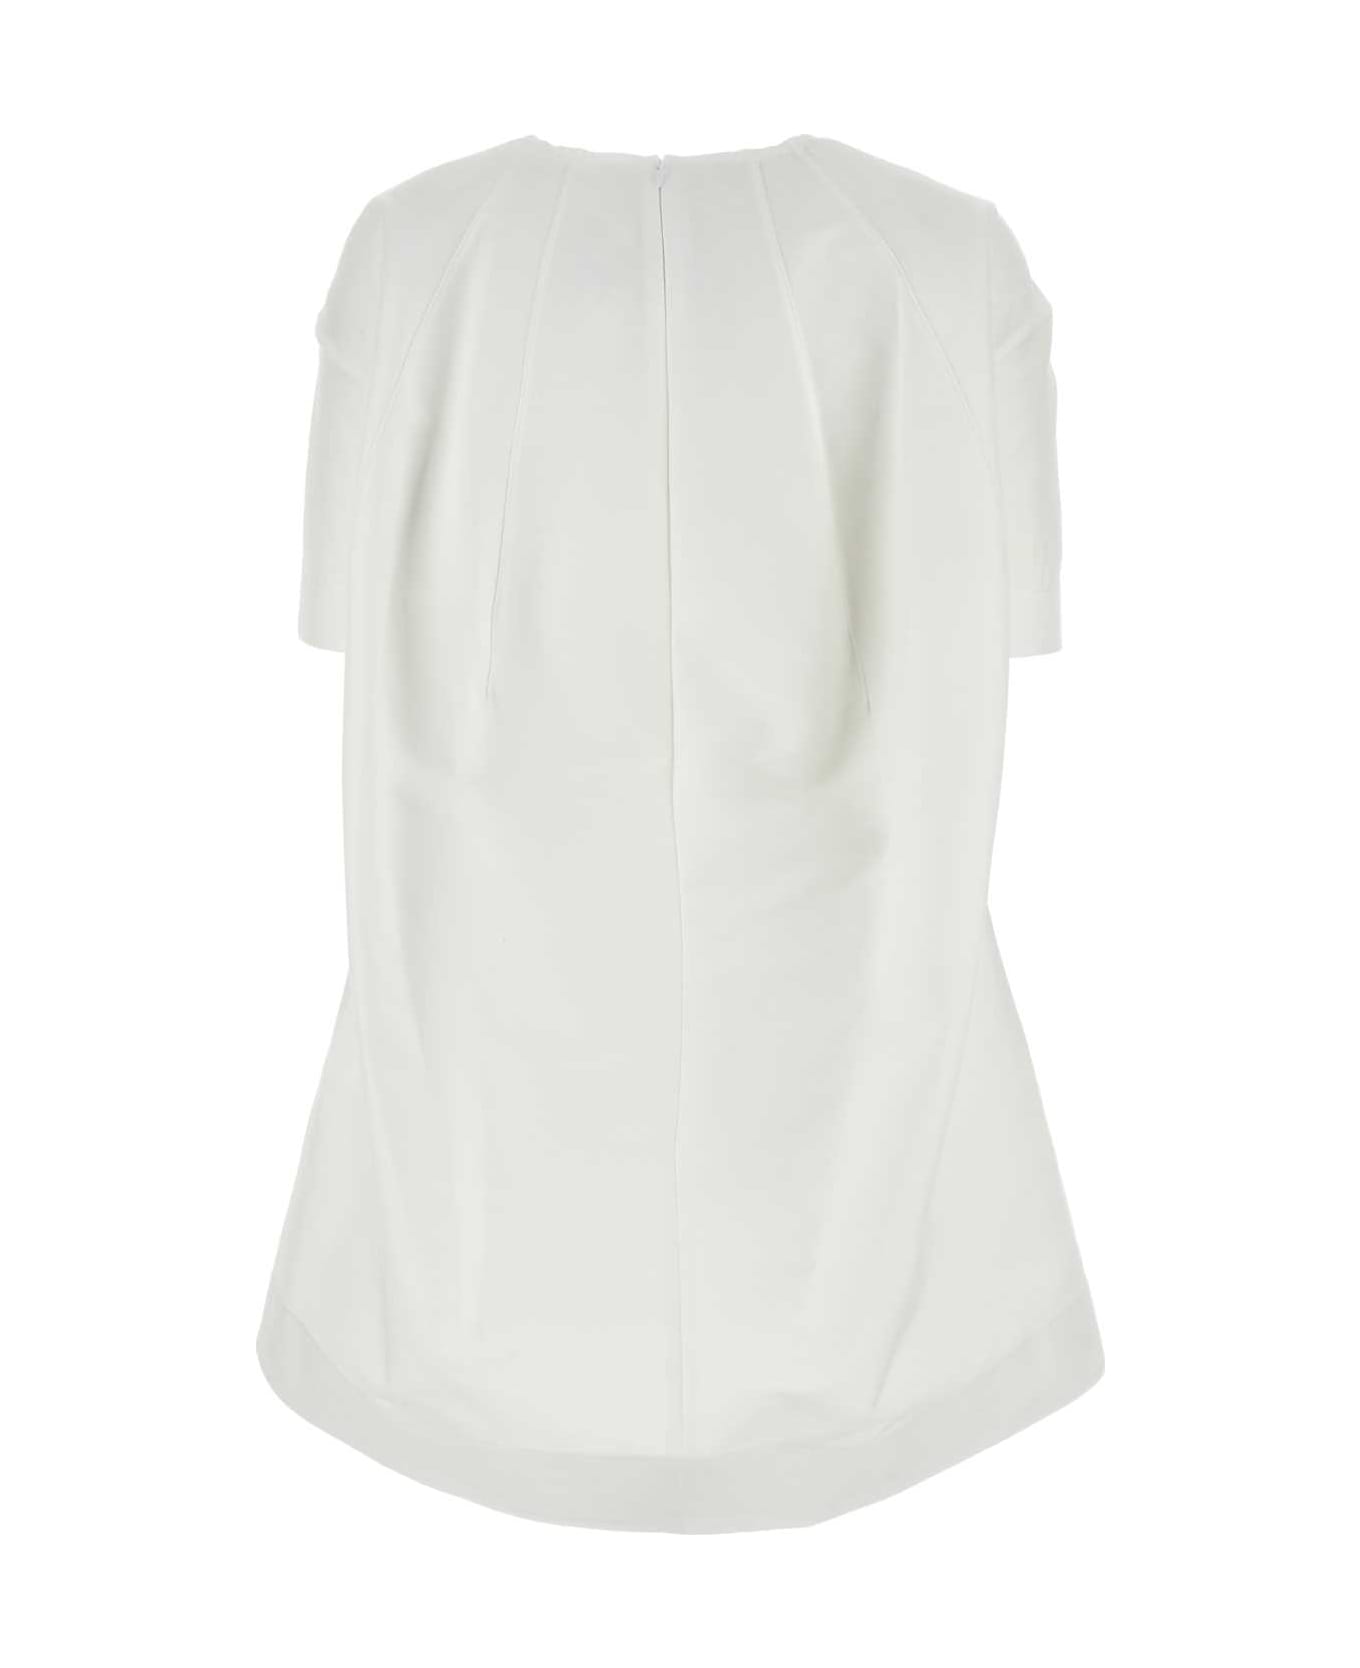 Marni White Cotton T-shirt Dress - LILYWHITE